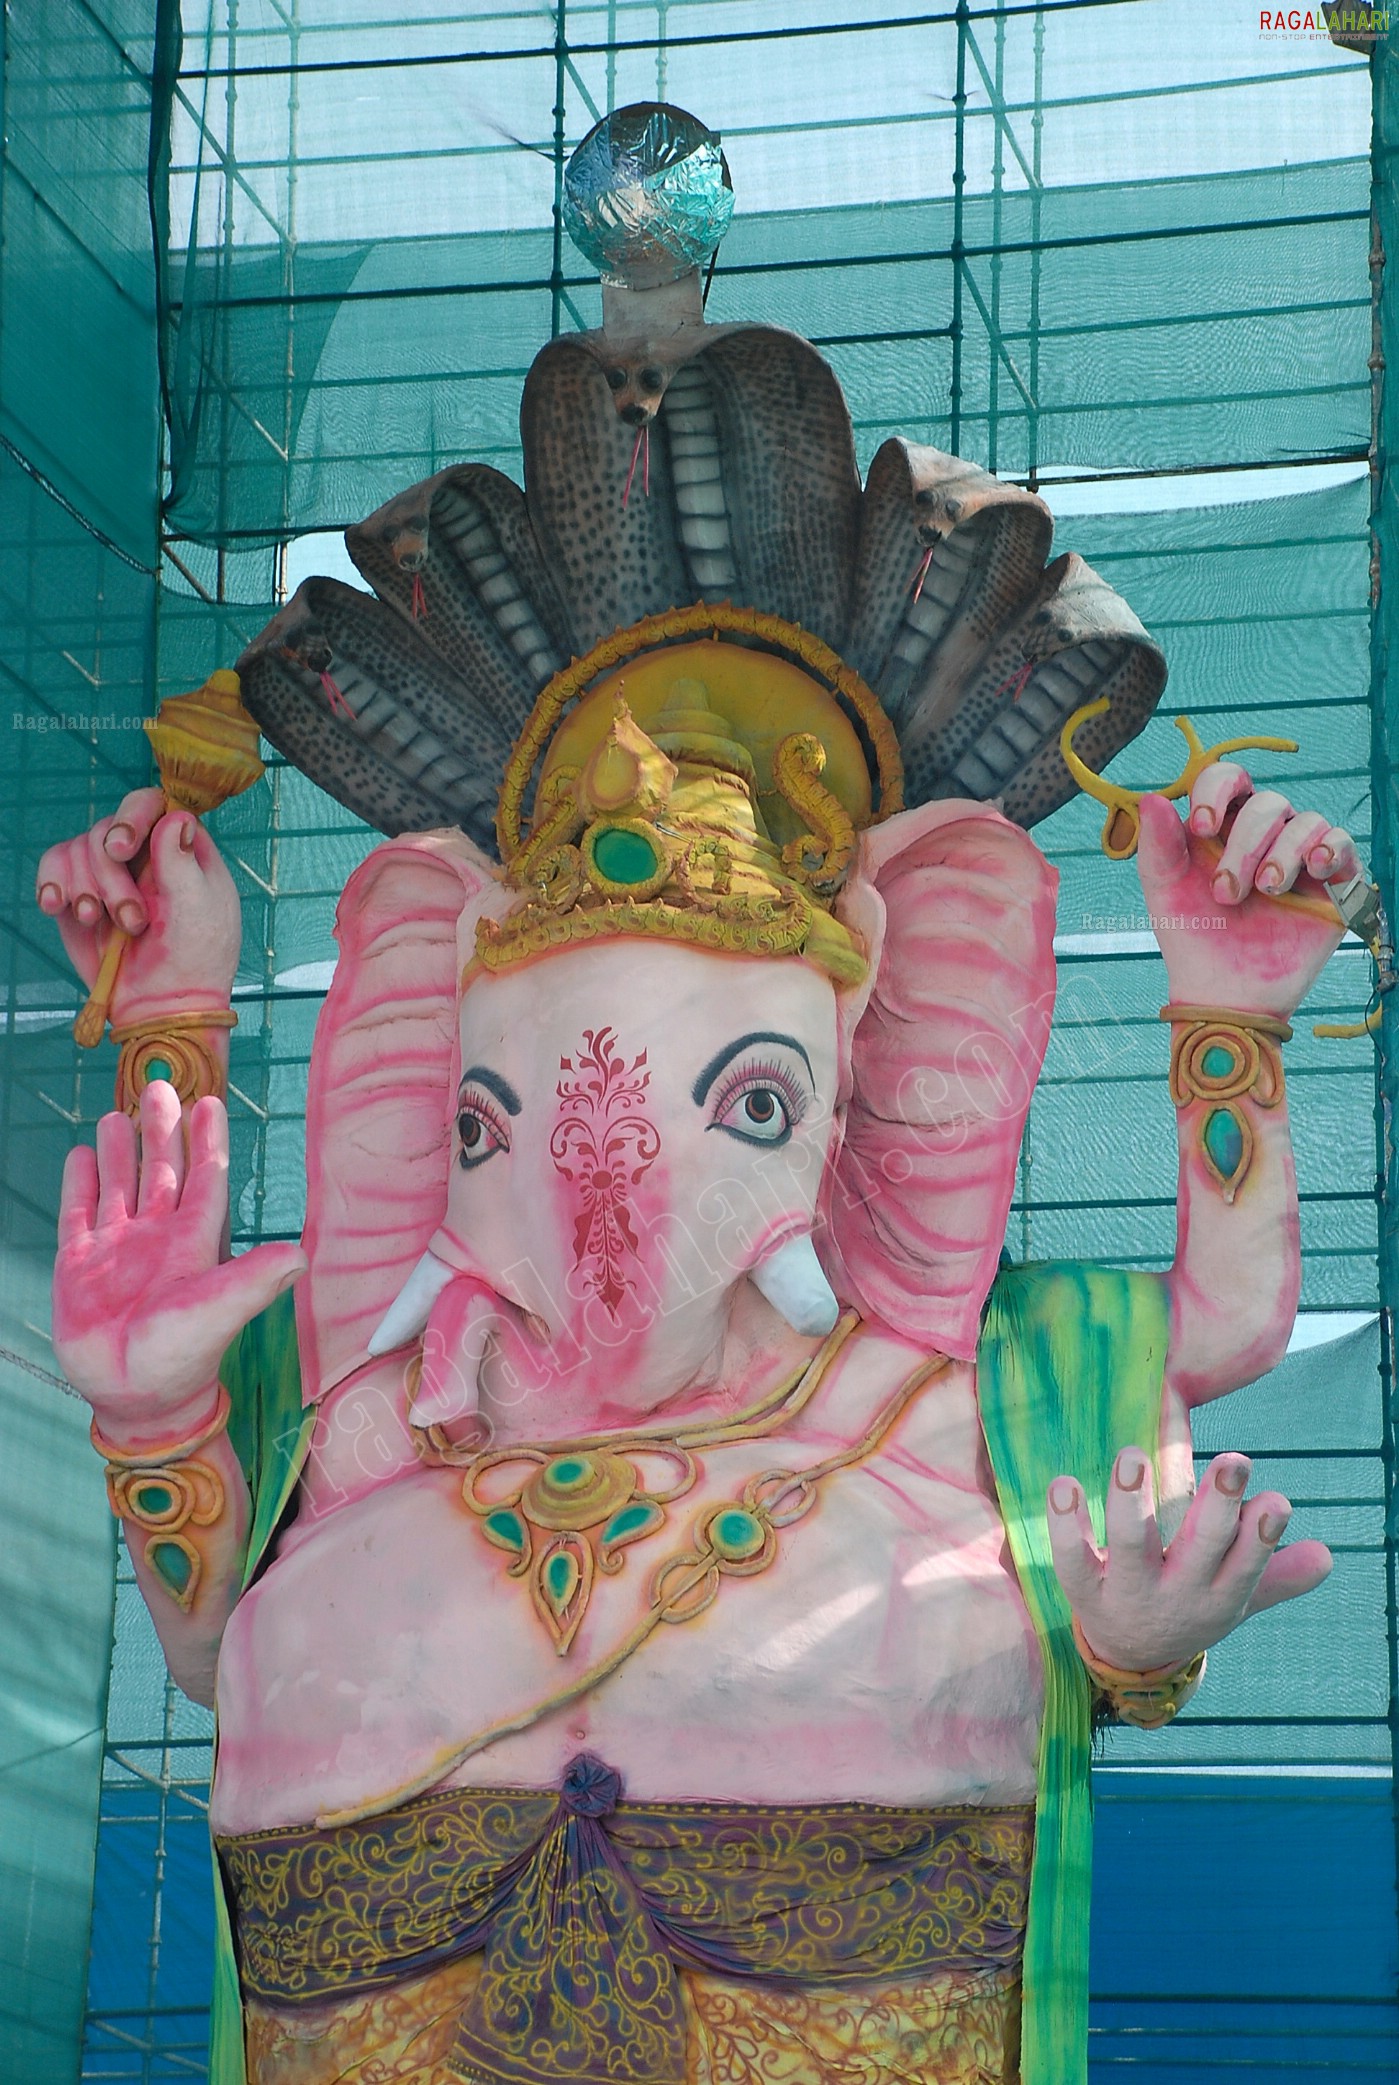 Eco Ganesha Idols by TV9